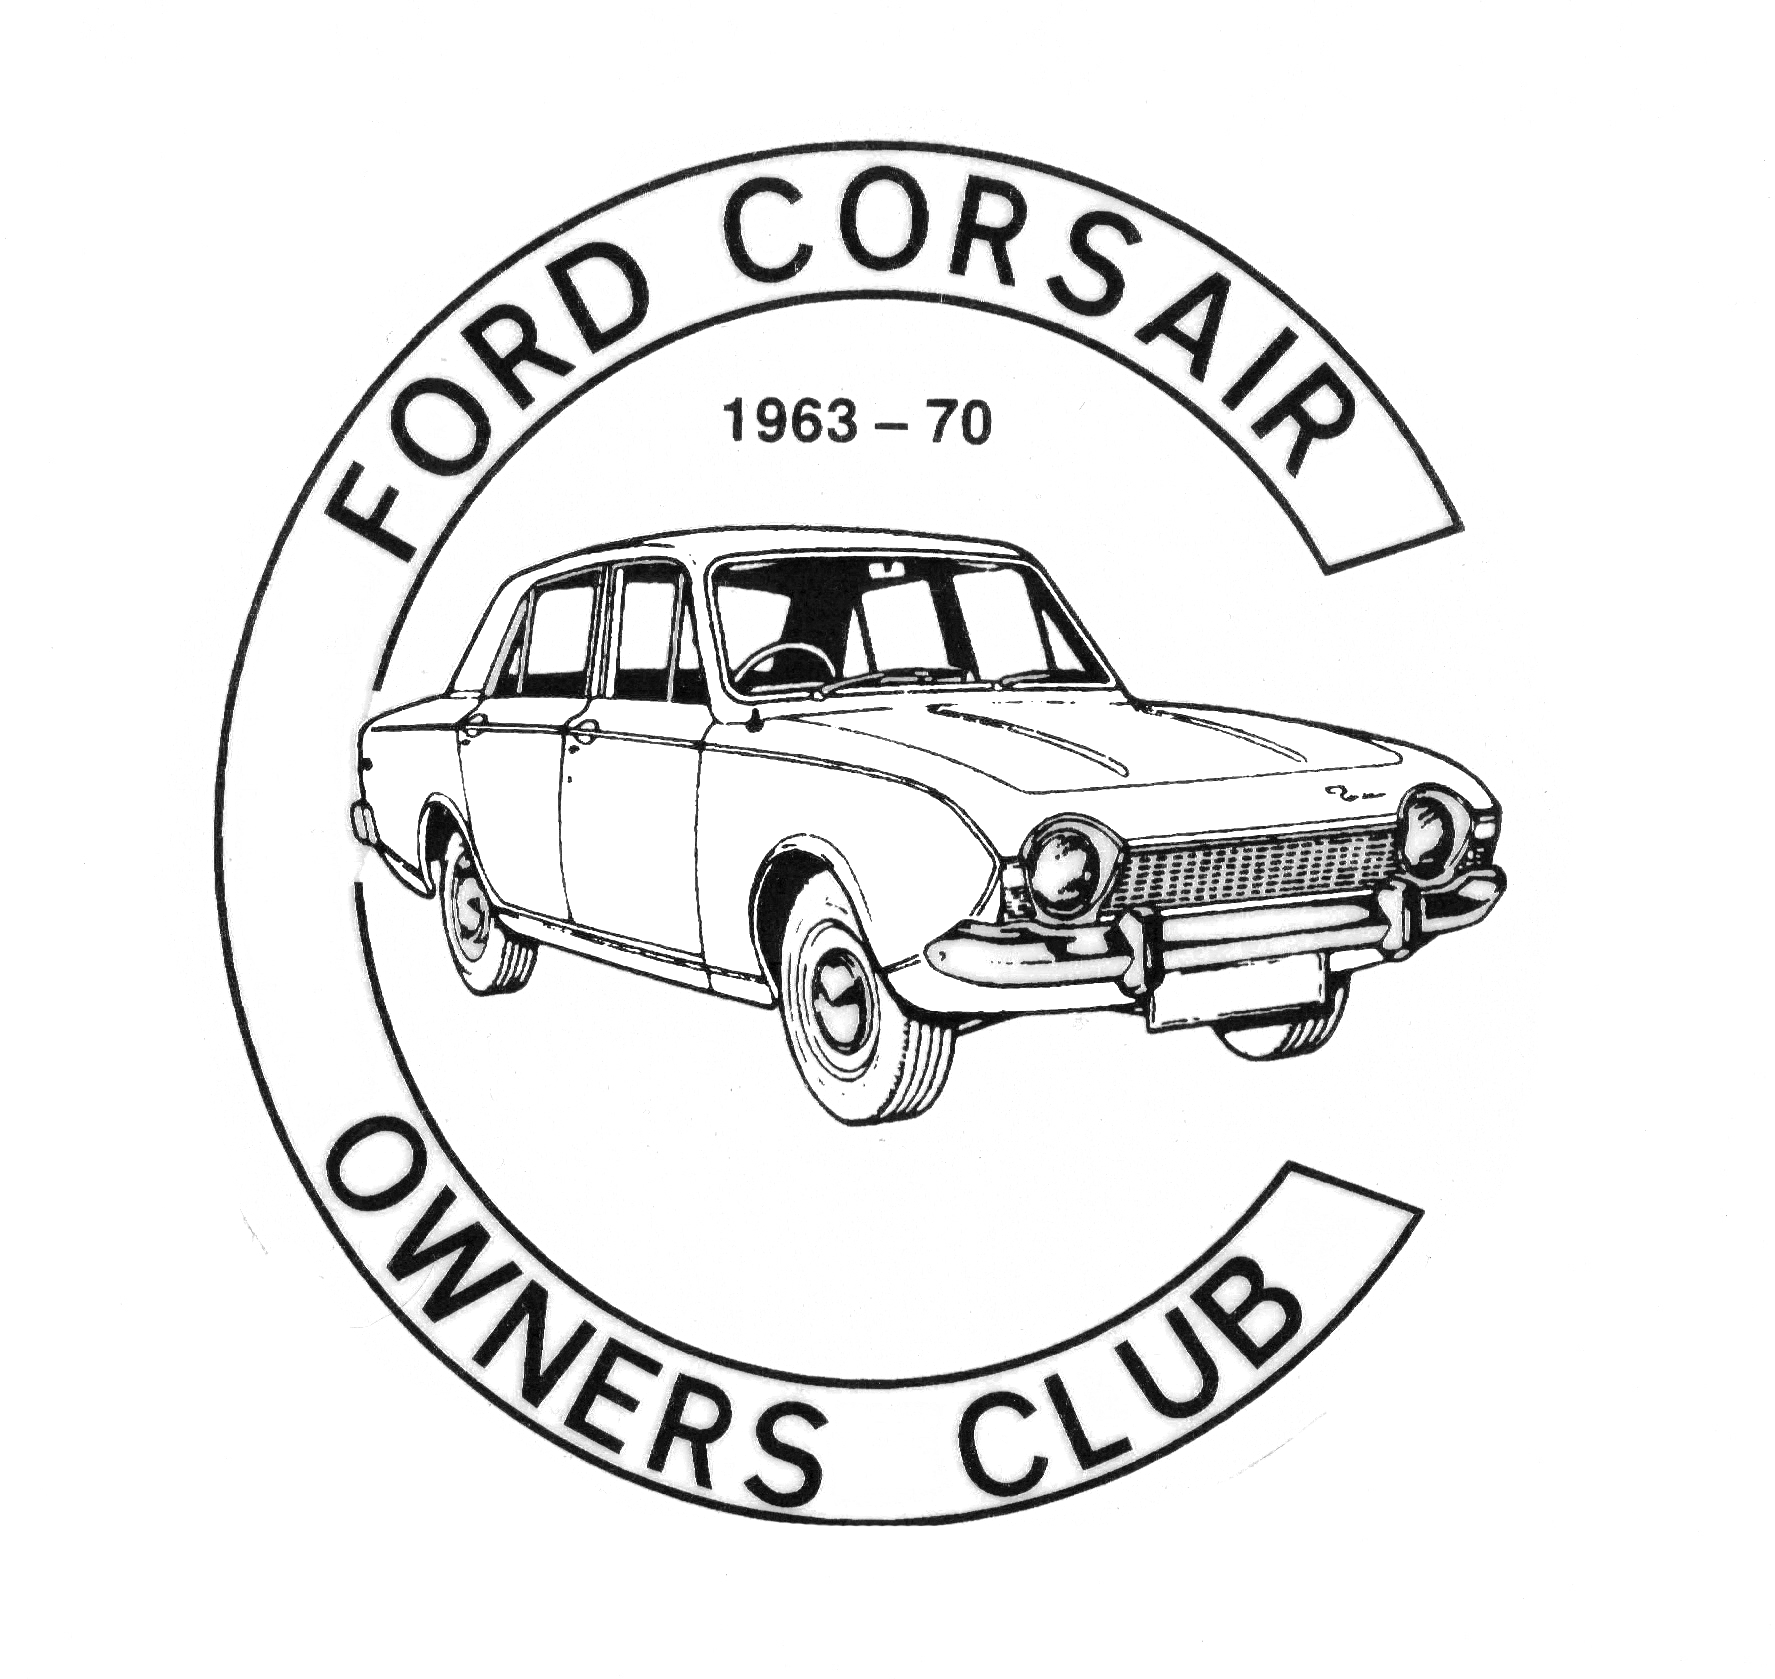 Ford Corsair Owners Club